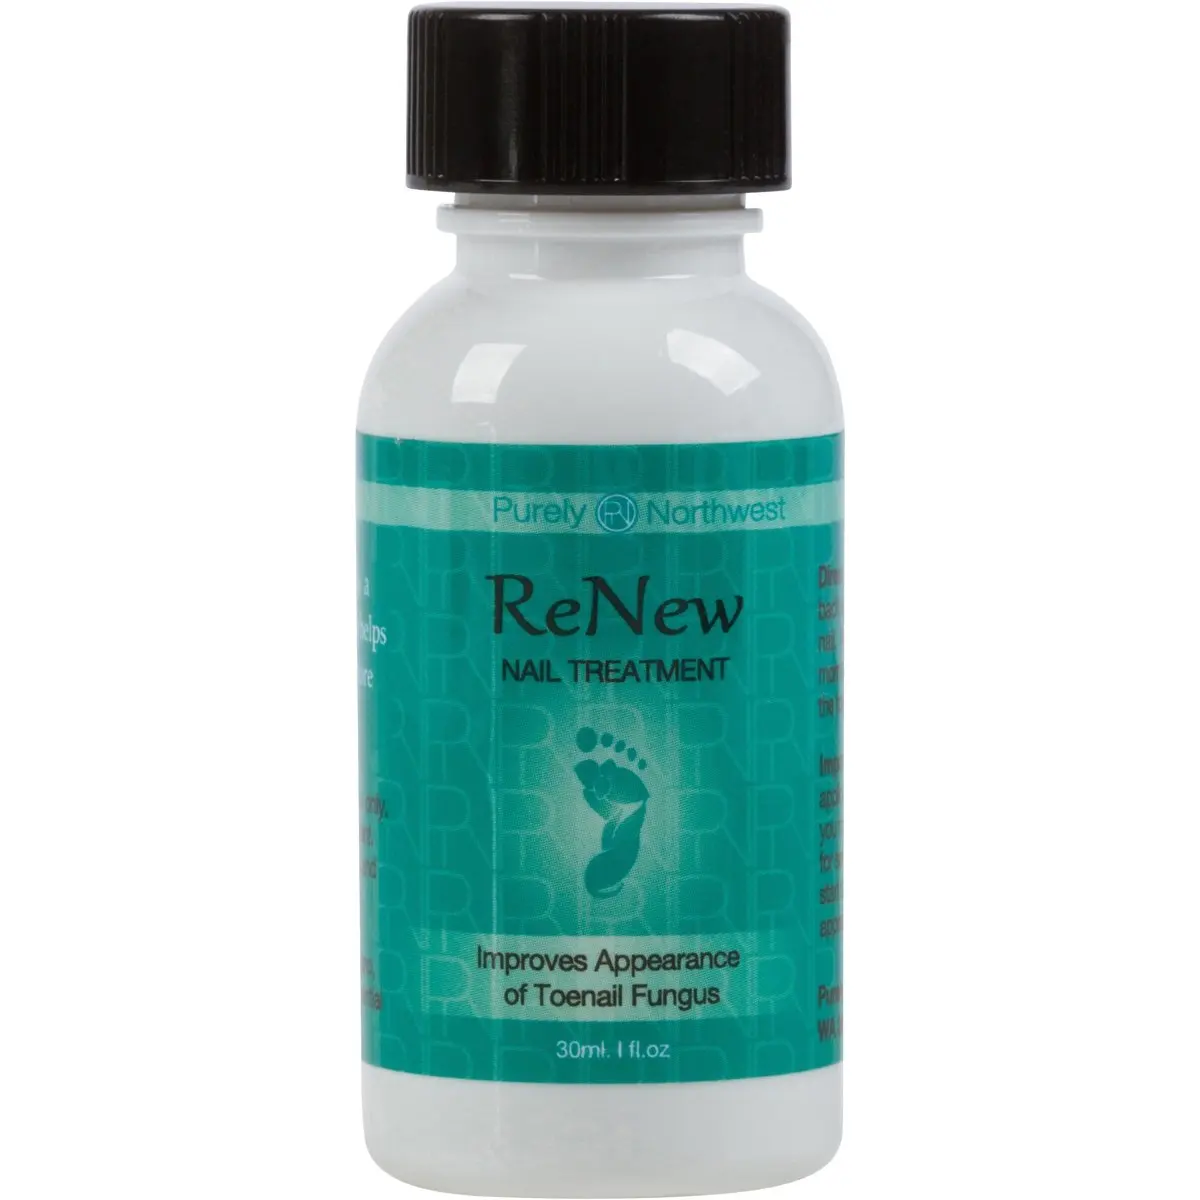 13.95. Tea Tree Oil Nail Blend- Natural Toenail Care Solution to Help Renew...